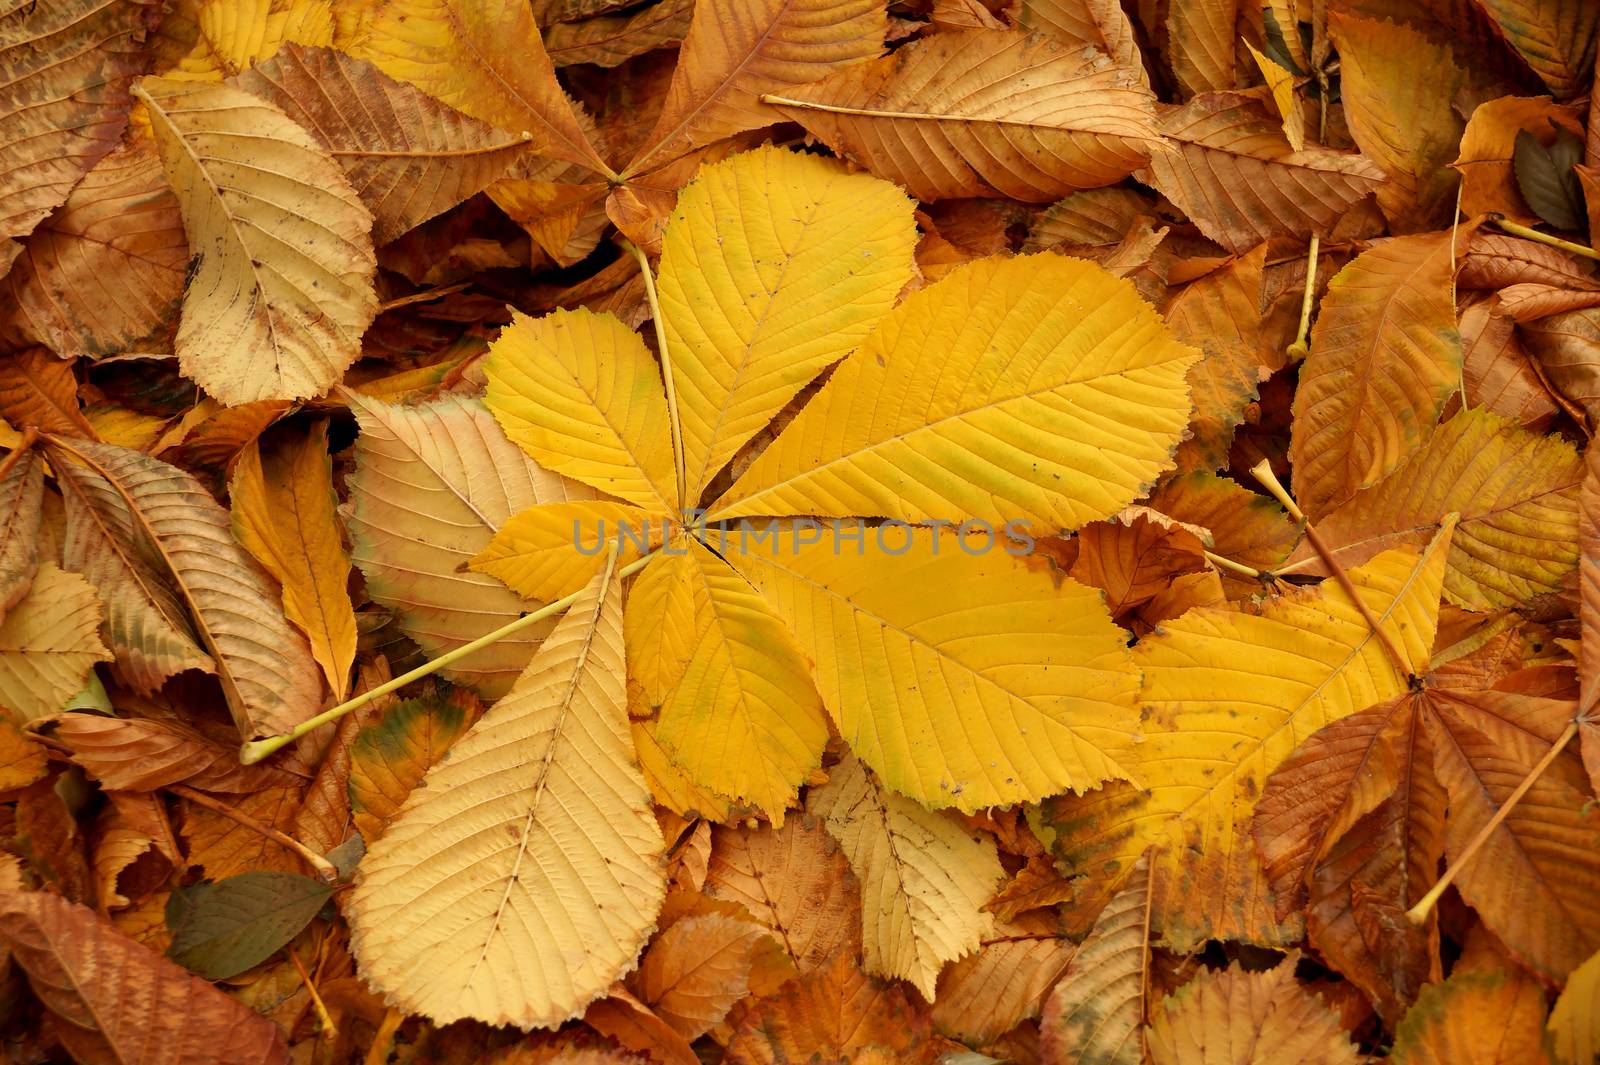 Autumn leaves by Vadimdem